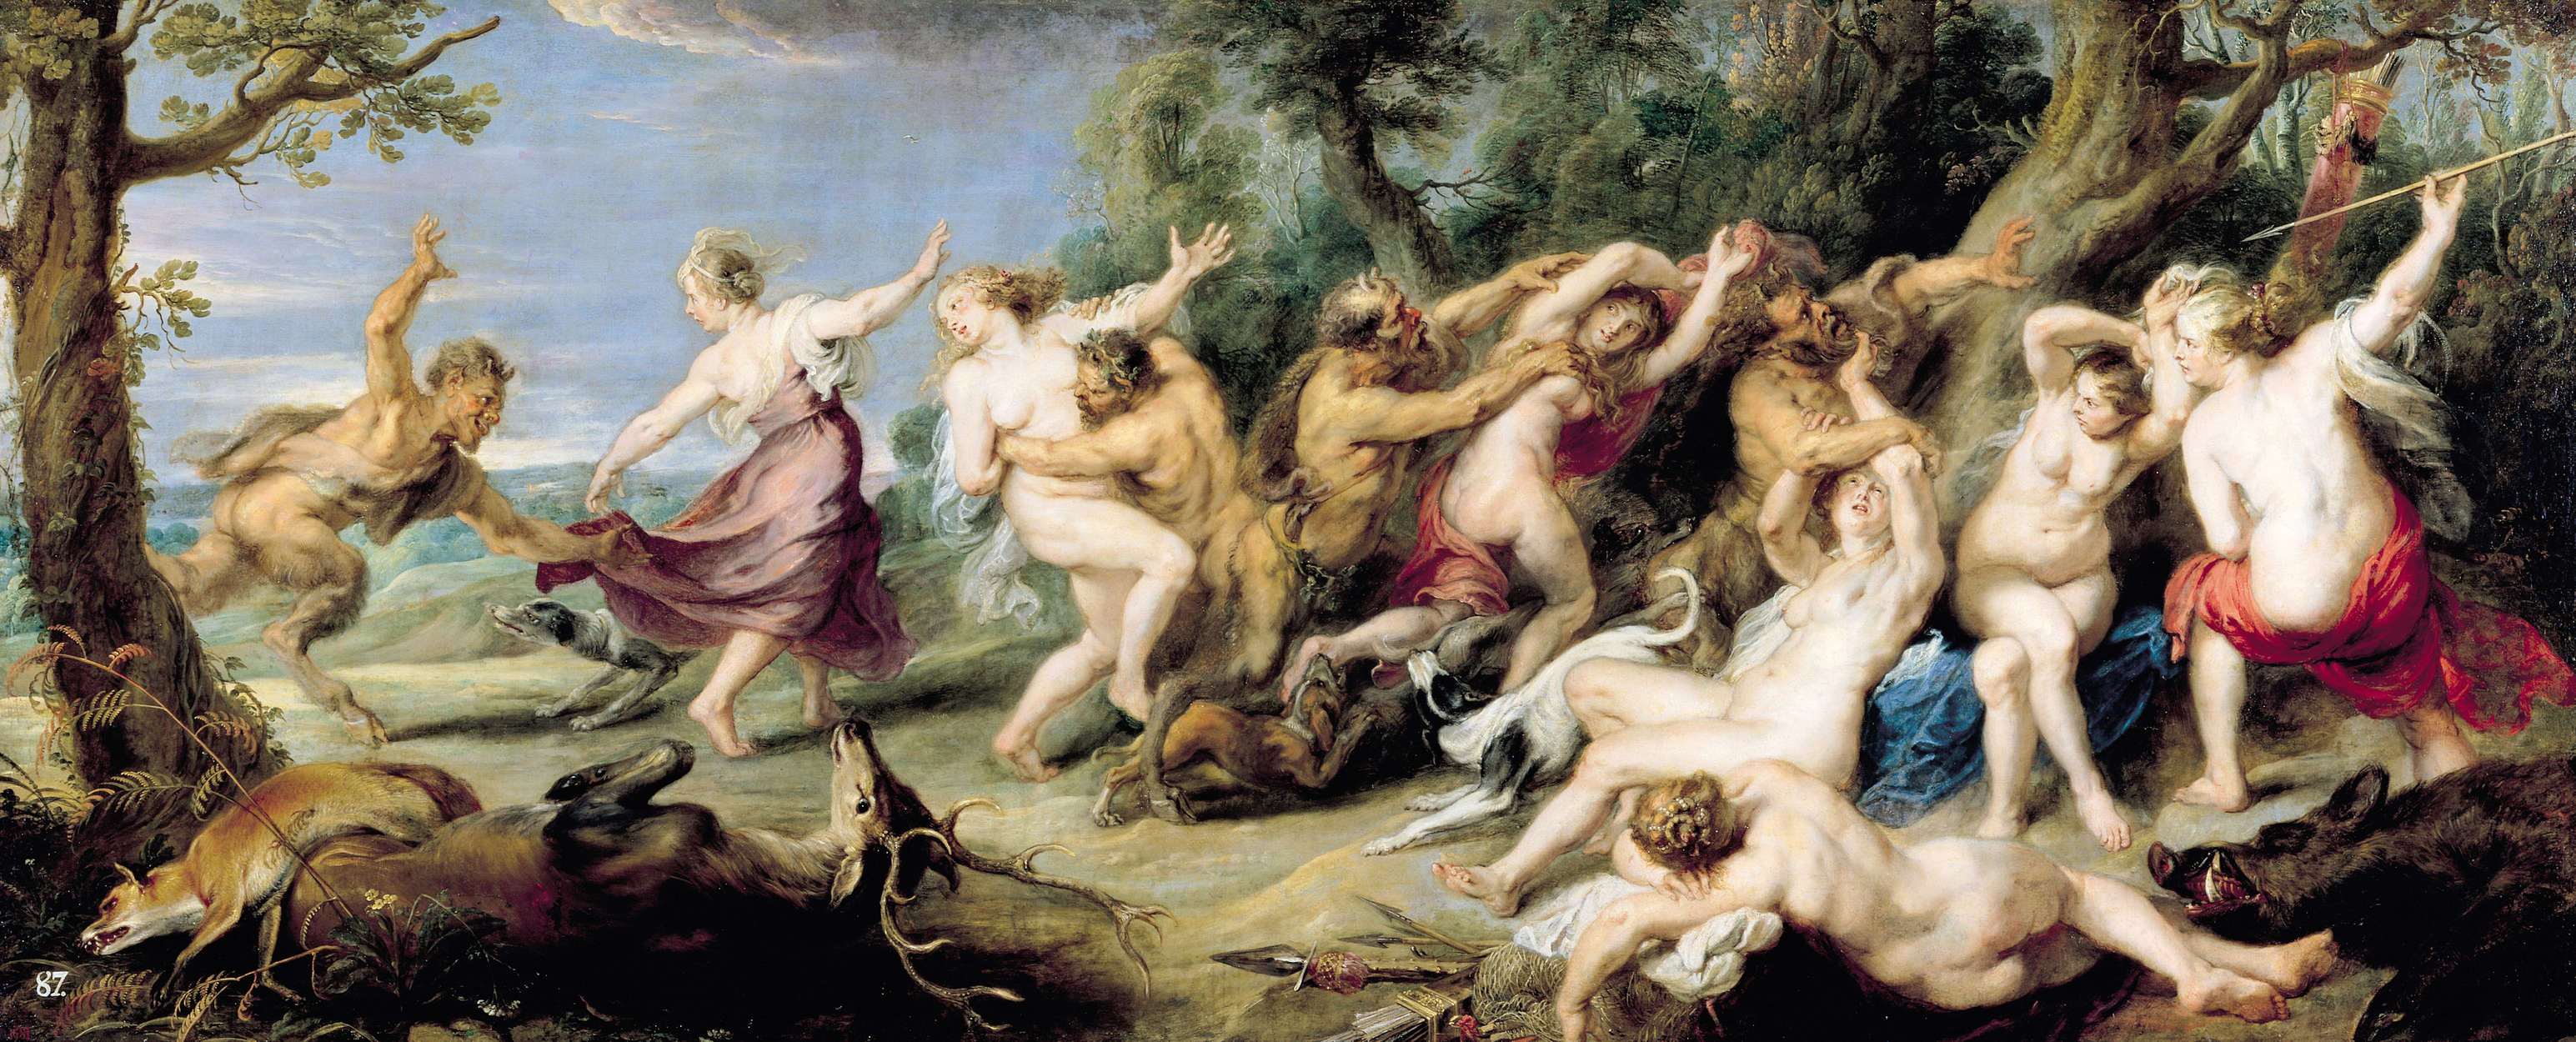             Fotomurali "Diana e le sue ninfe a caccia" di Peter Paul Rubens
        